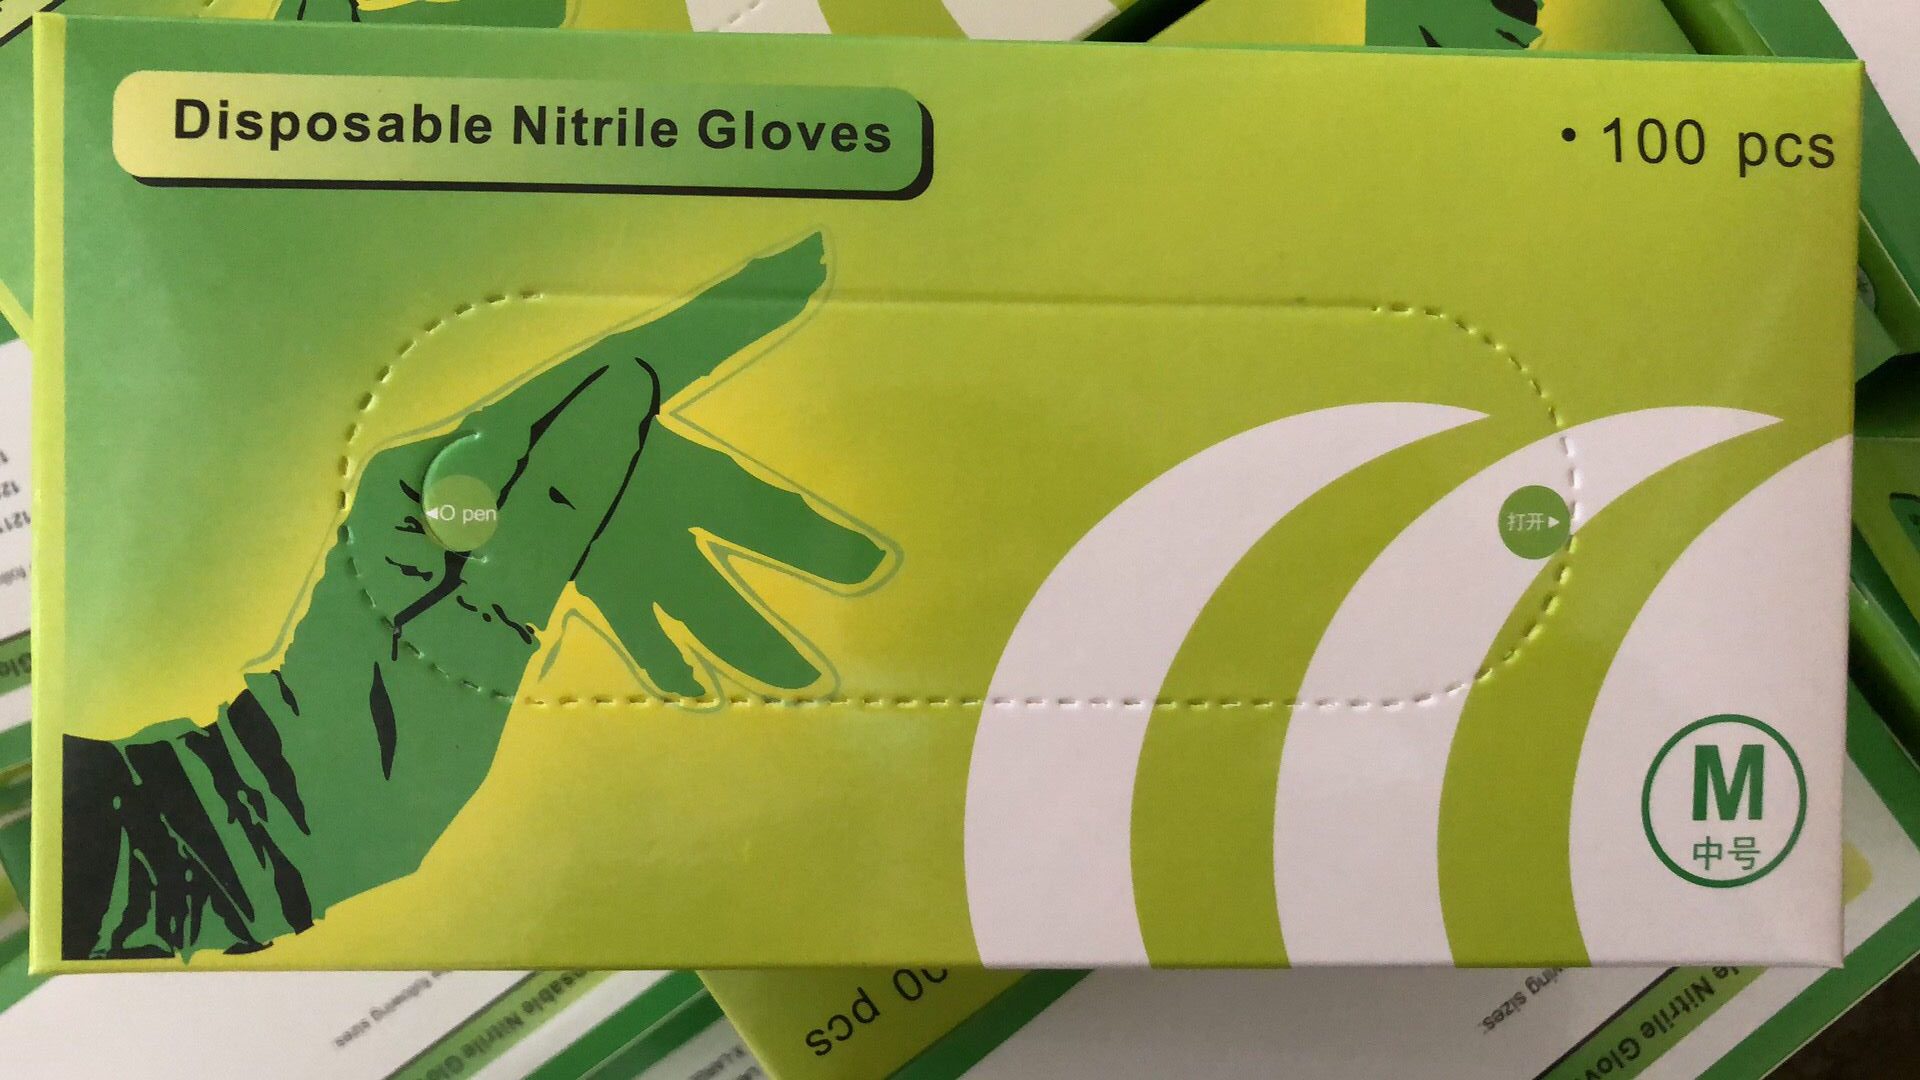 Disposable Nitrile Gloves6